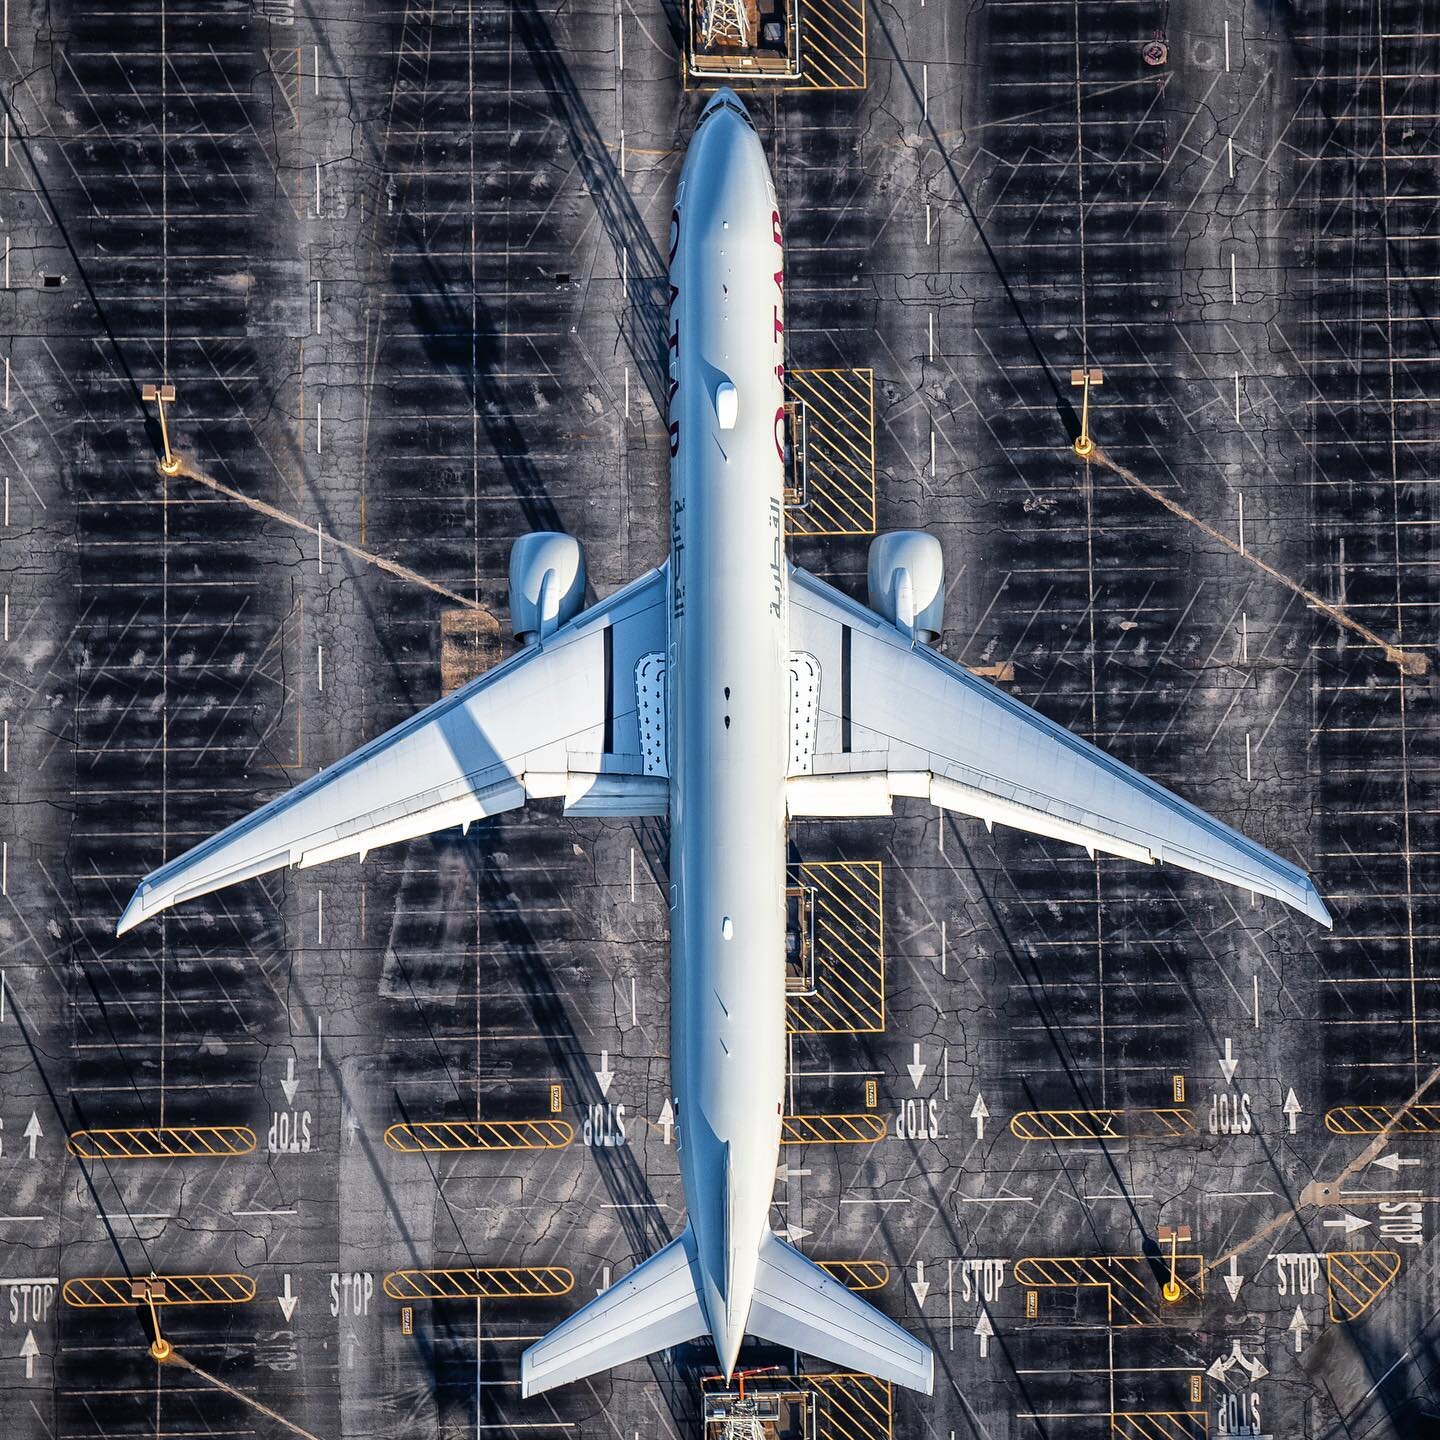 A Qatar 777 coming on final approach for ATL over the long term parking lot. #qatarairwayscrew #qatarairways #boeing #atl #boeinglovers #atlairport #atlanta  #instagramaviation #aviation #aviationphoto #aviationphotography #nikon #nikonphoto #d850 #a